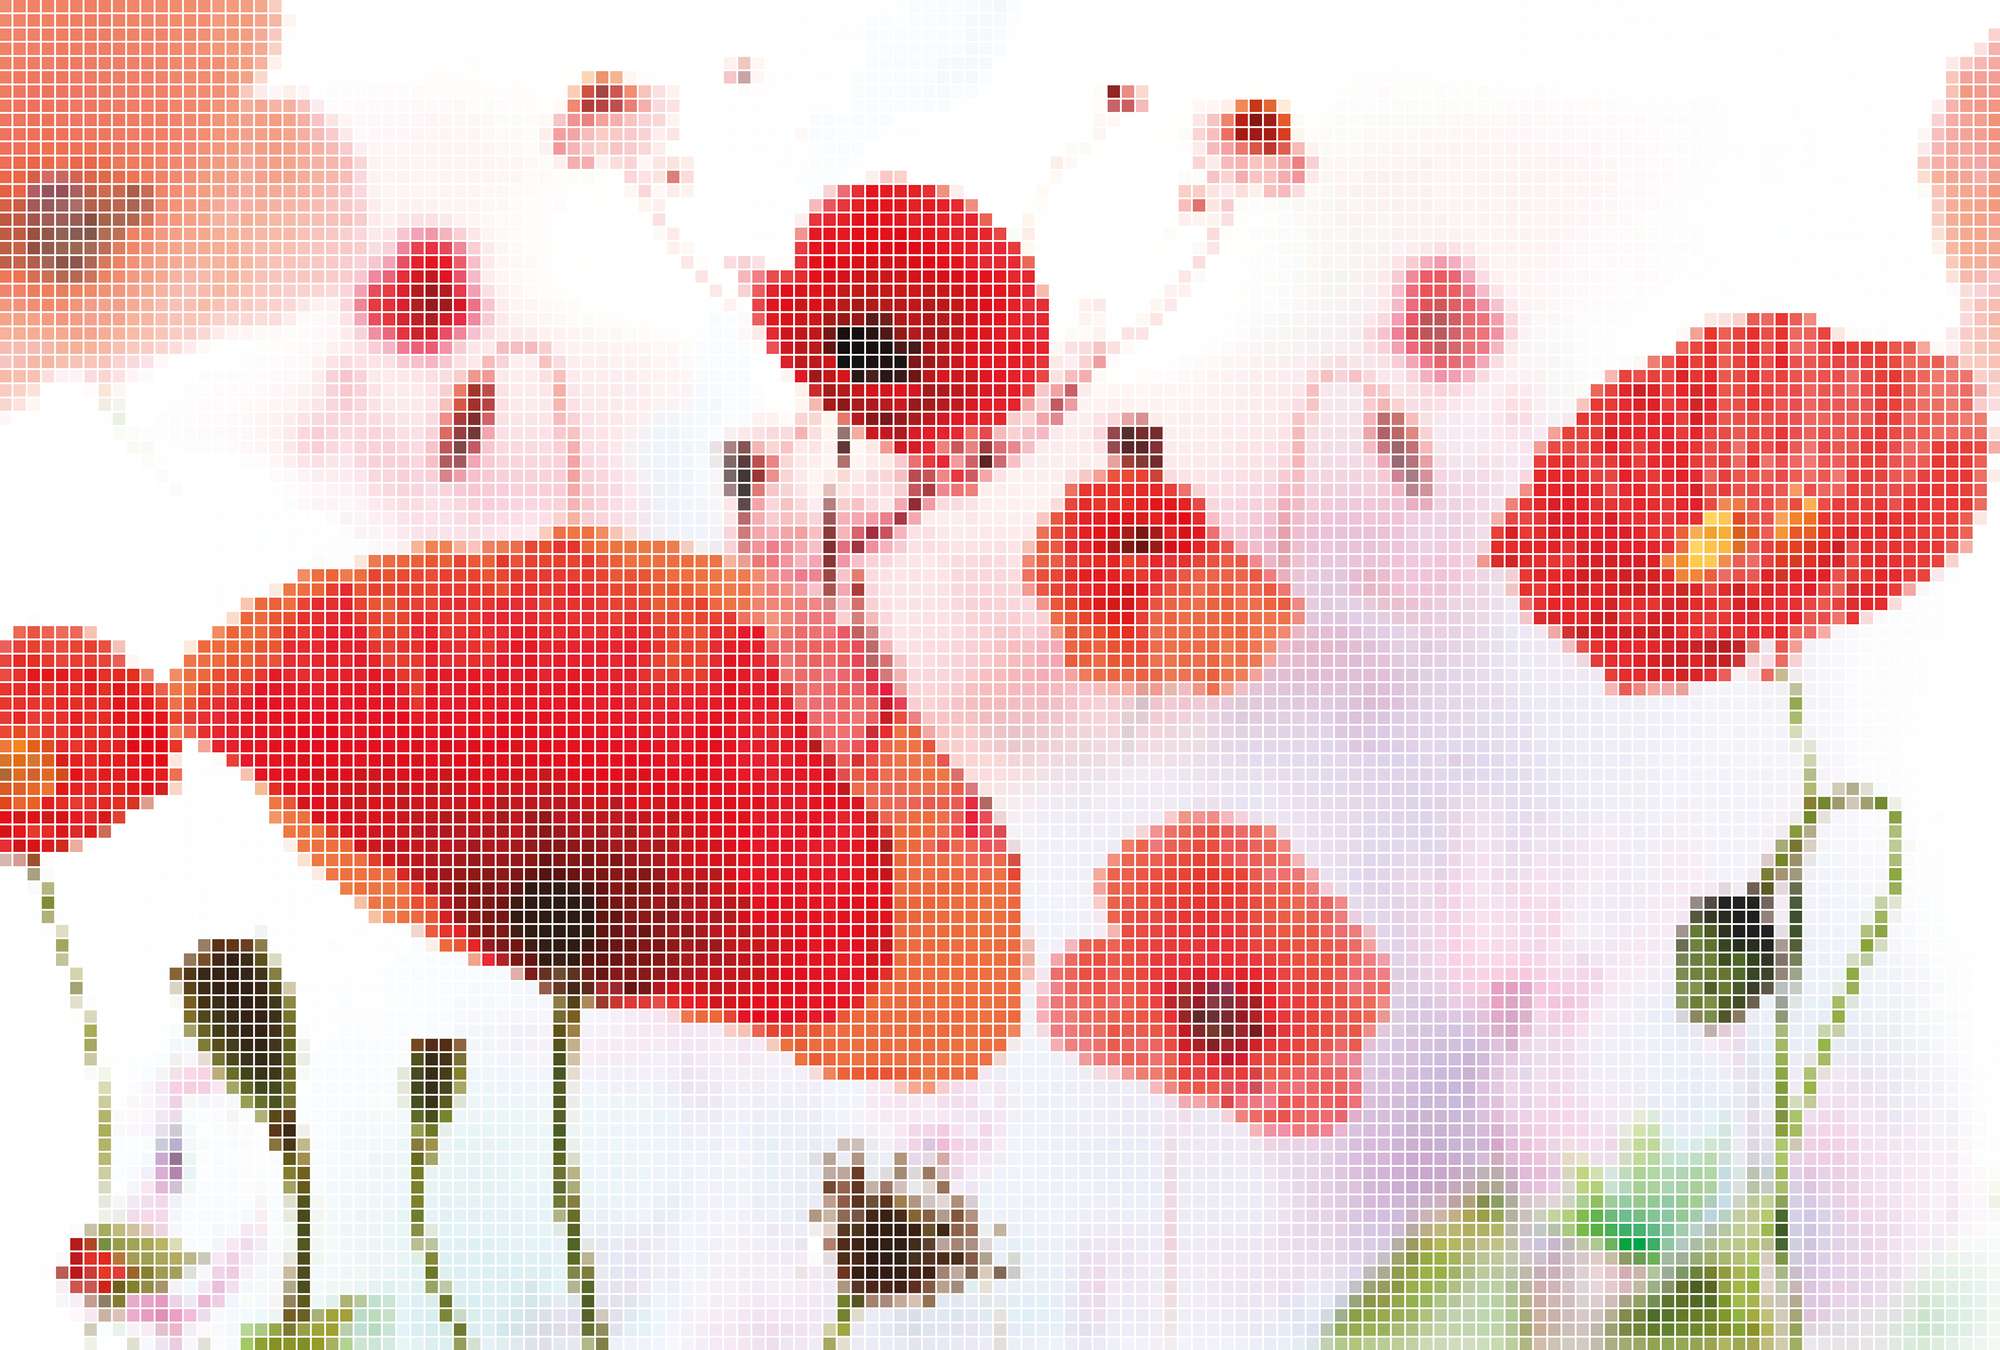             Pixel artwork mural - poppies in graphic design
        